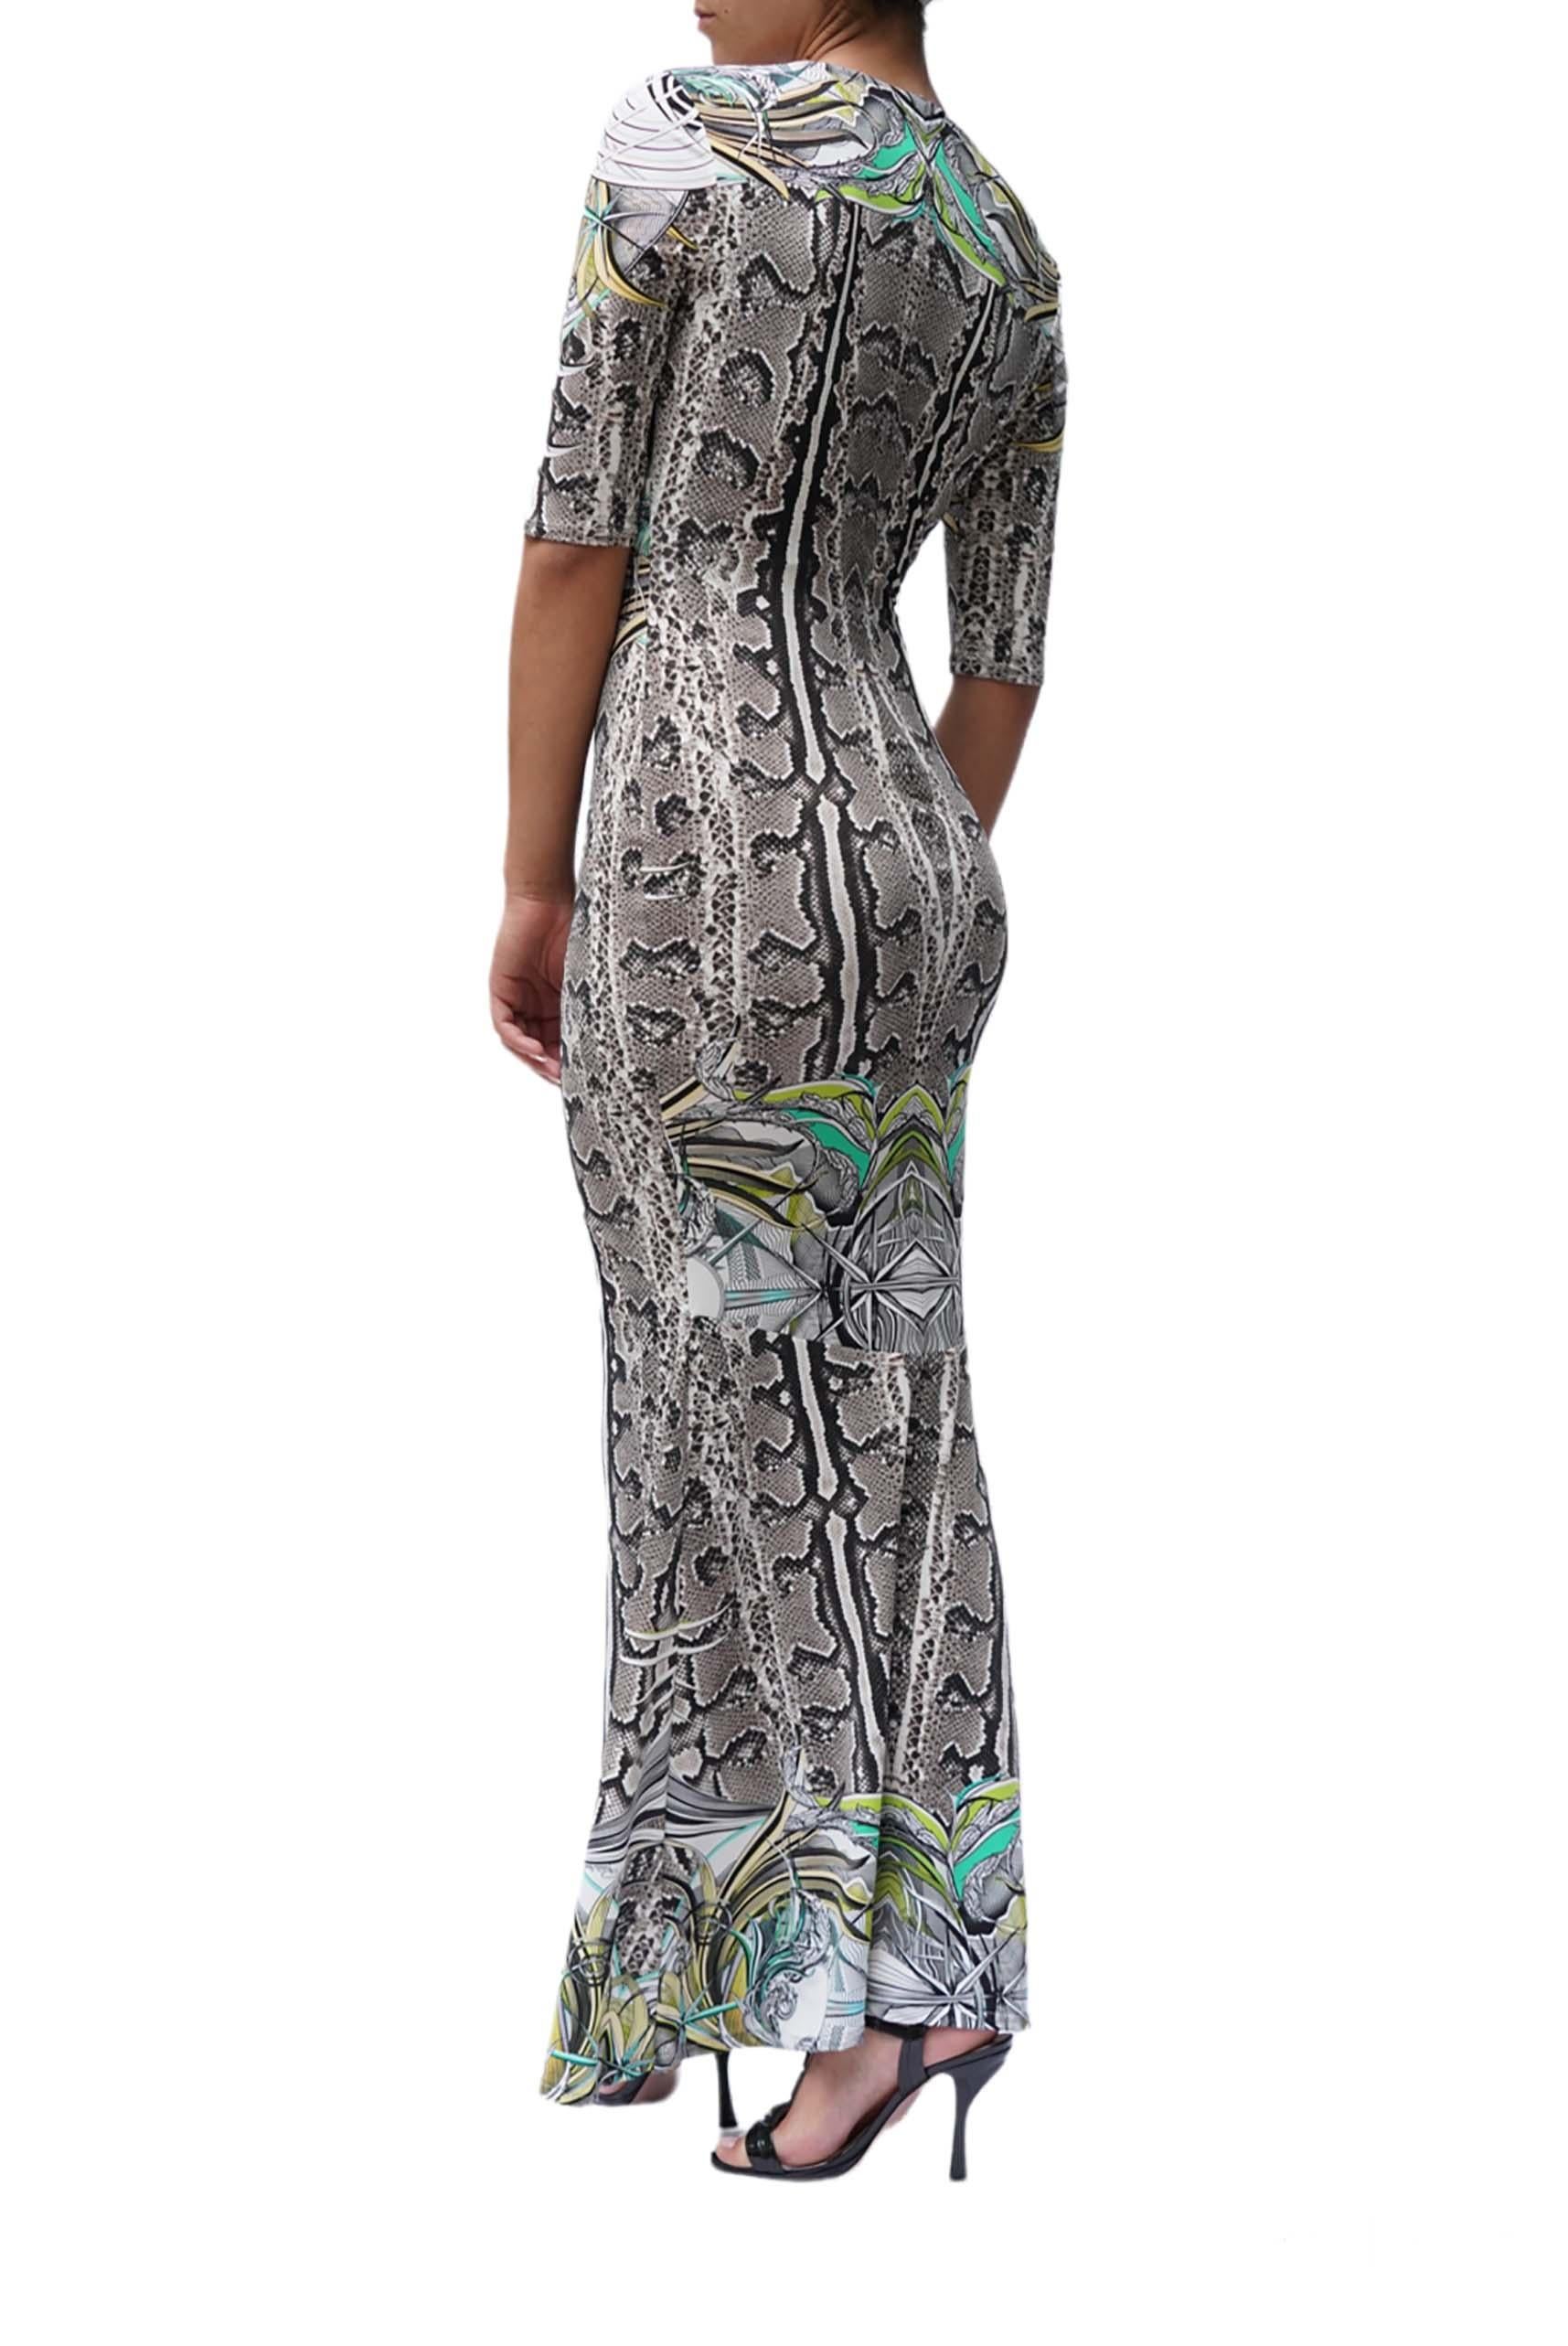 Women's 2000S ROBERTO CAVALLI Snake Print Multicolored Jersey Long Sleeve  Dress For Sale